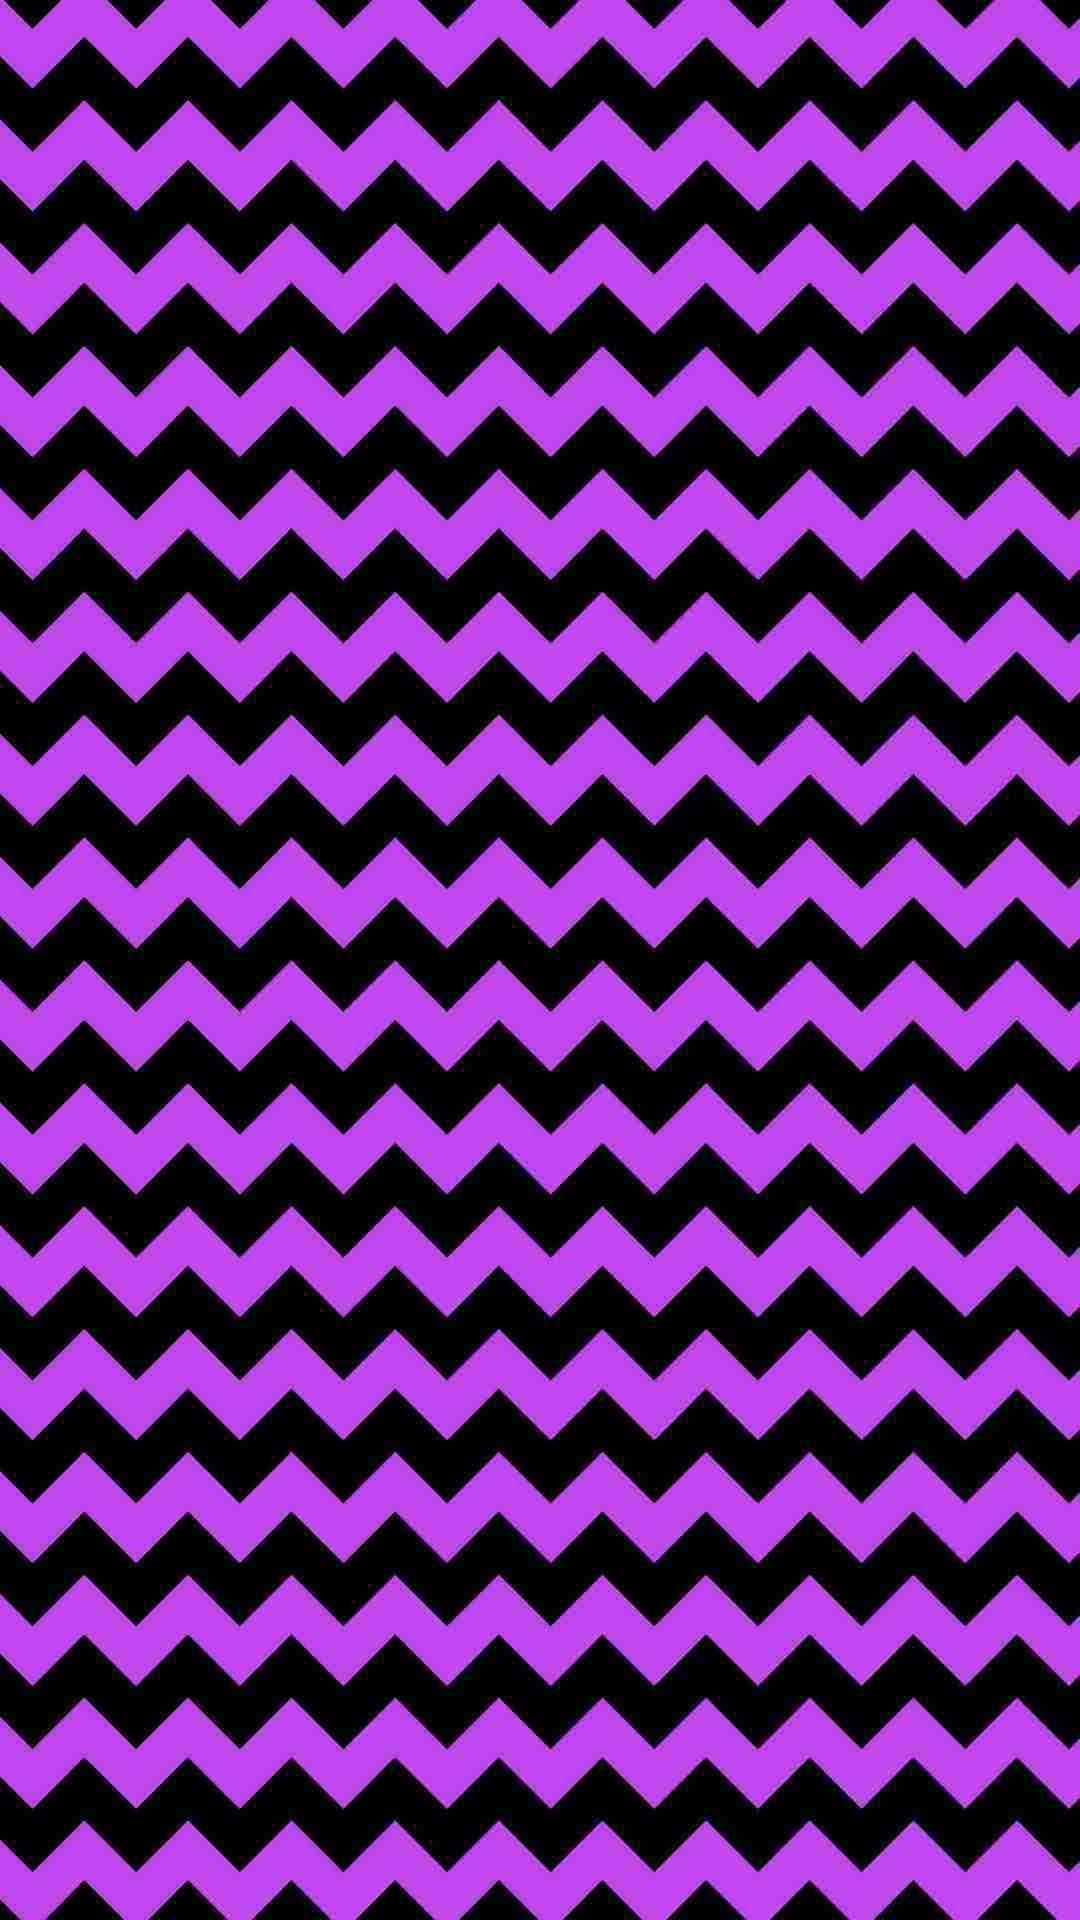 1080x1920 Purple and Black Chevron iPhone 6 Plus Wallpaper - Glitter Ze Print, Zigzag  Pattern #iPhone #6 #Plus #Wallpaper #Chevron #Zigzag